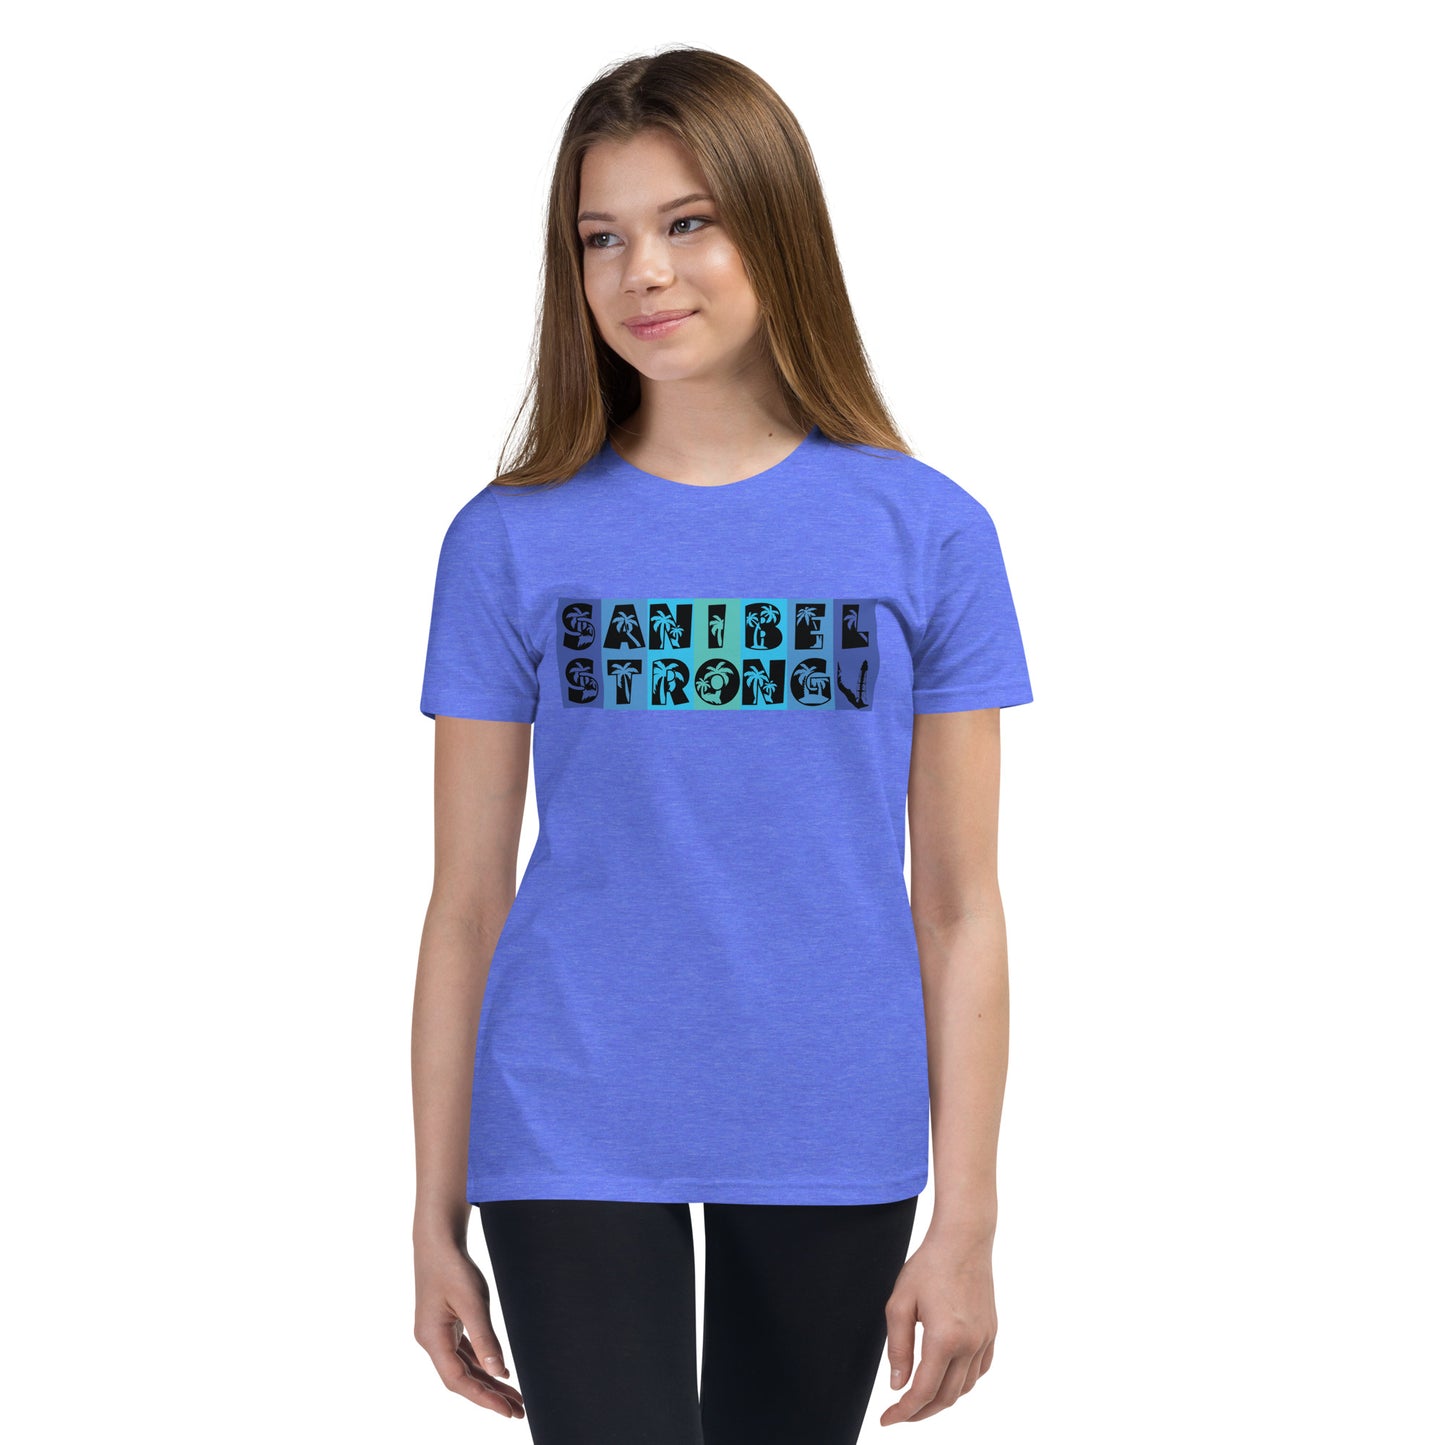 Sanibel Strong Youth Shirt - Blue Design